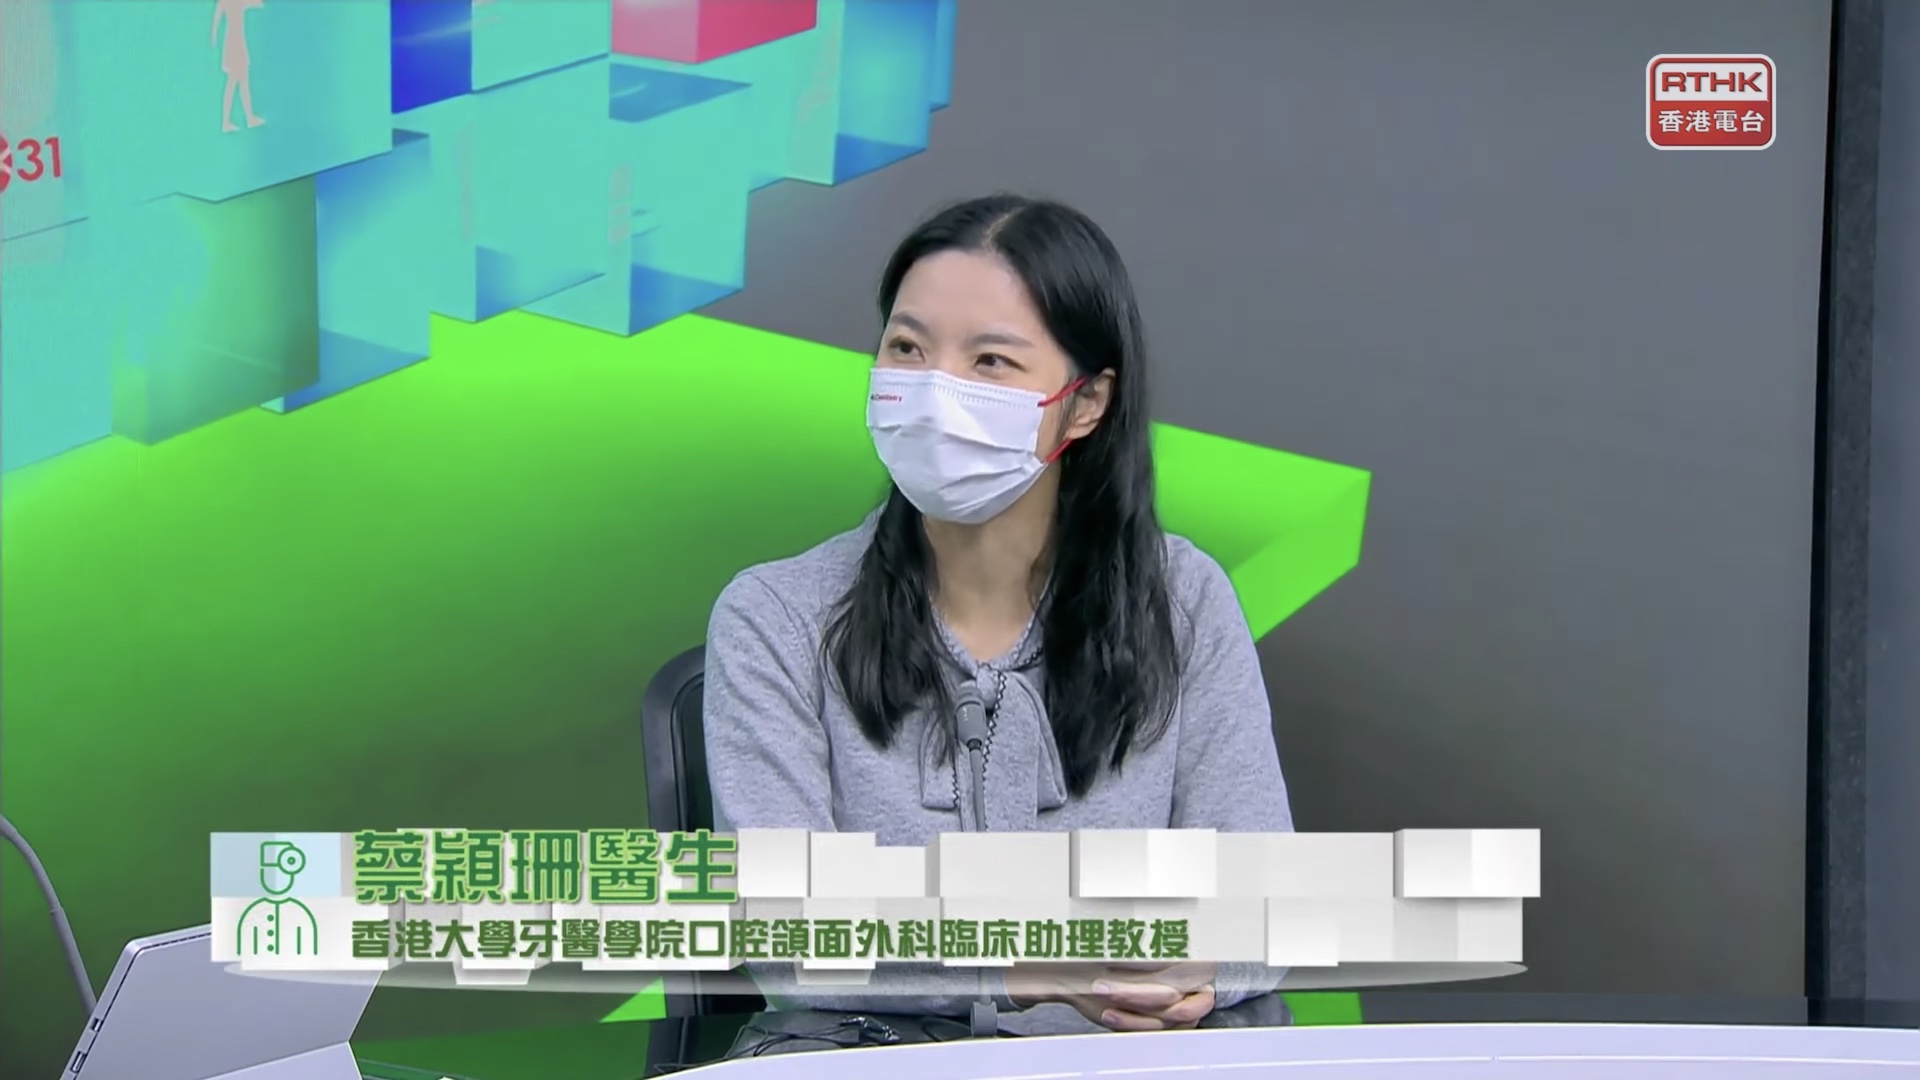 RTHK 31【精靈一點】: 香港大學牙醫學院四十周年系列- 口腔癌病人顎骨3D重建 video